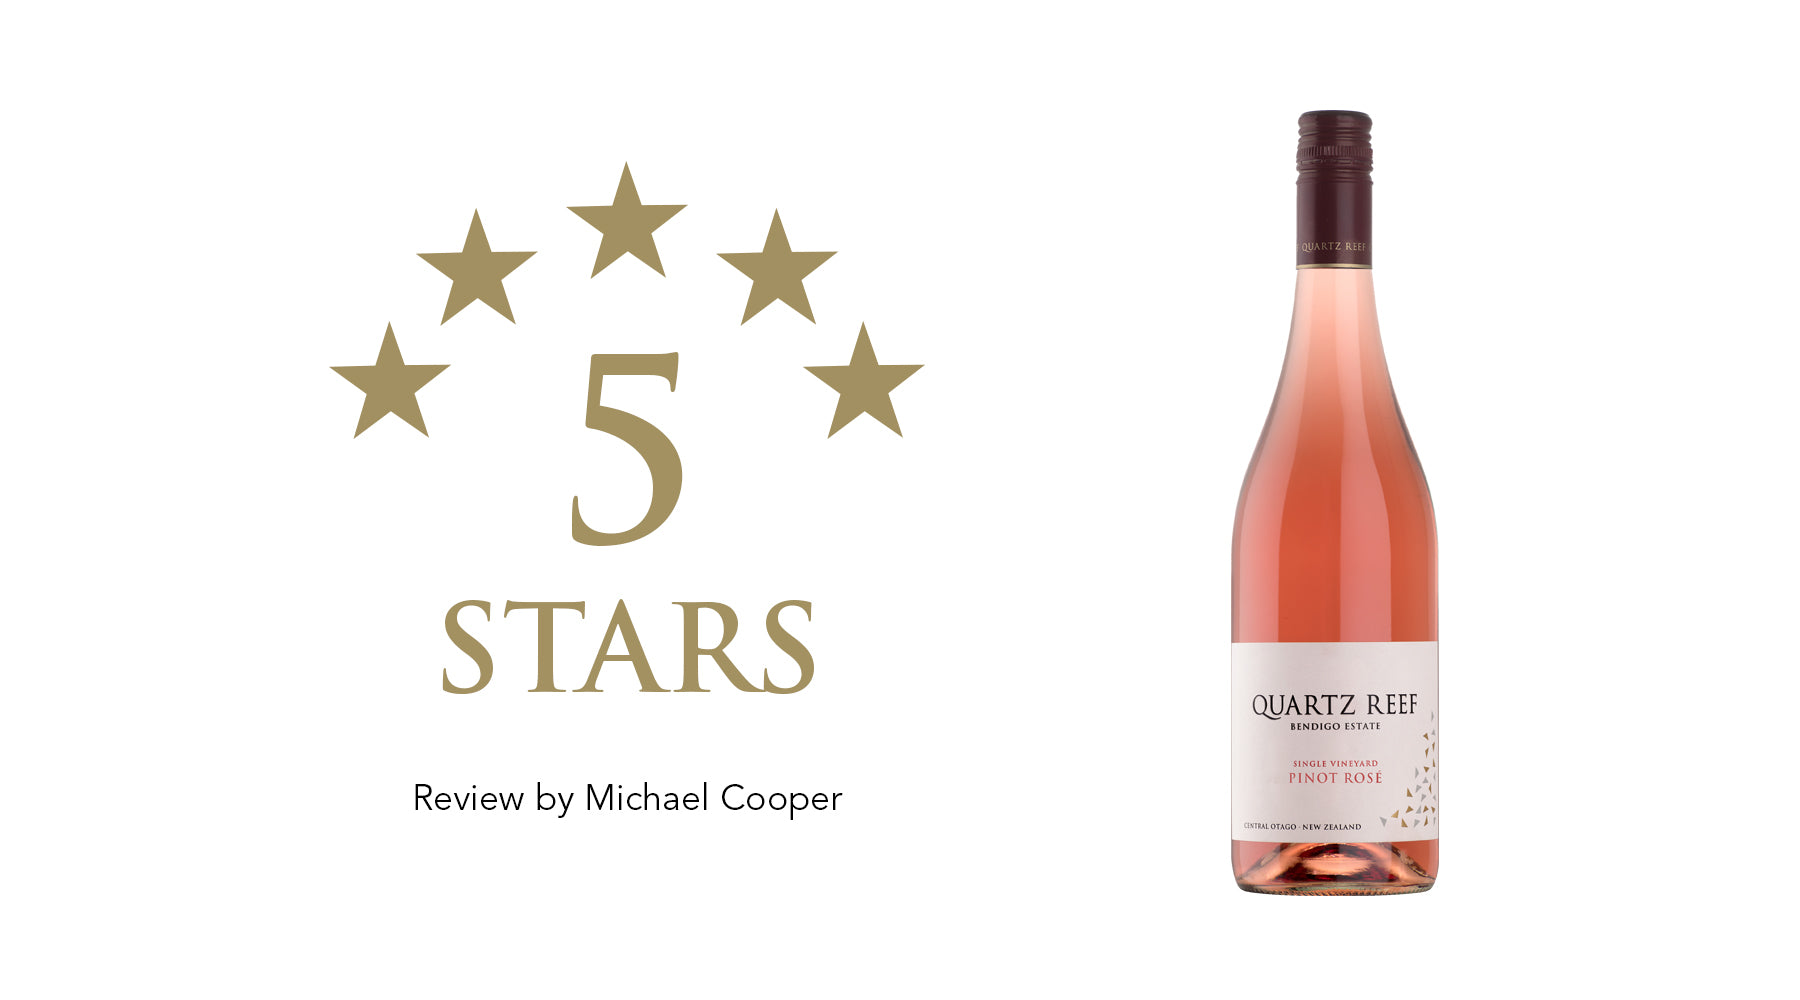 Pinot Rosé 2020 - Awarded 5 Stars